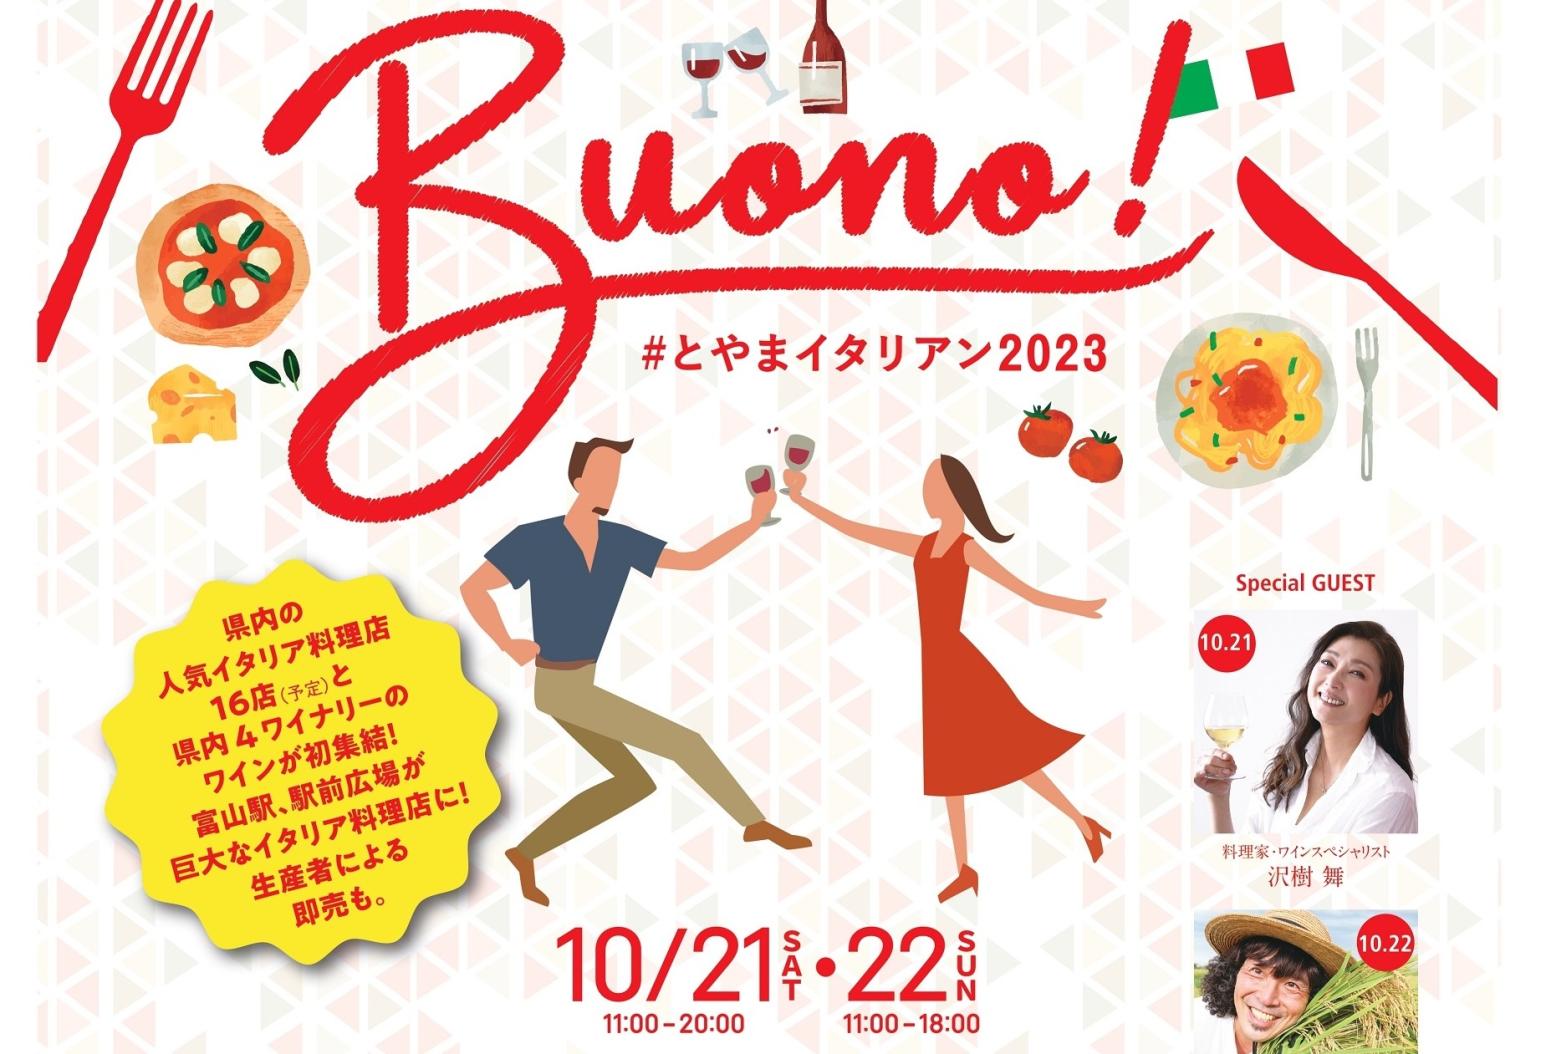 Buono!#とやまイタリアン2023-0